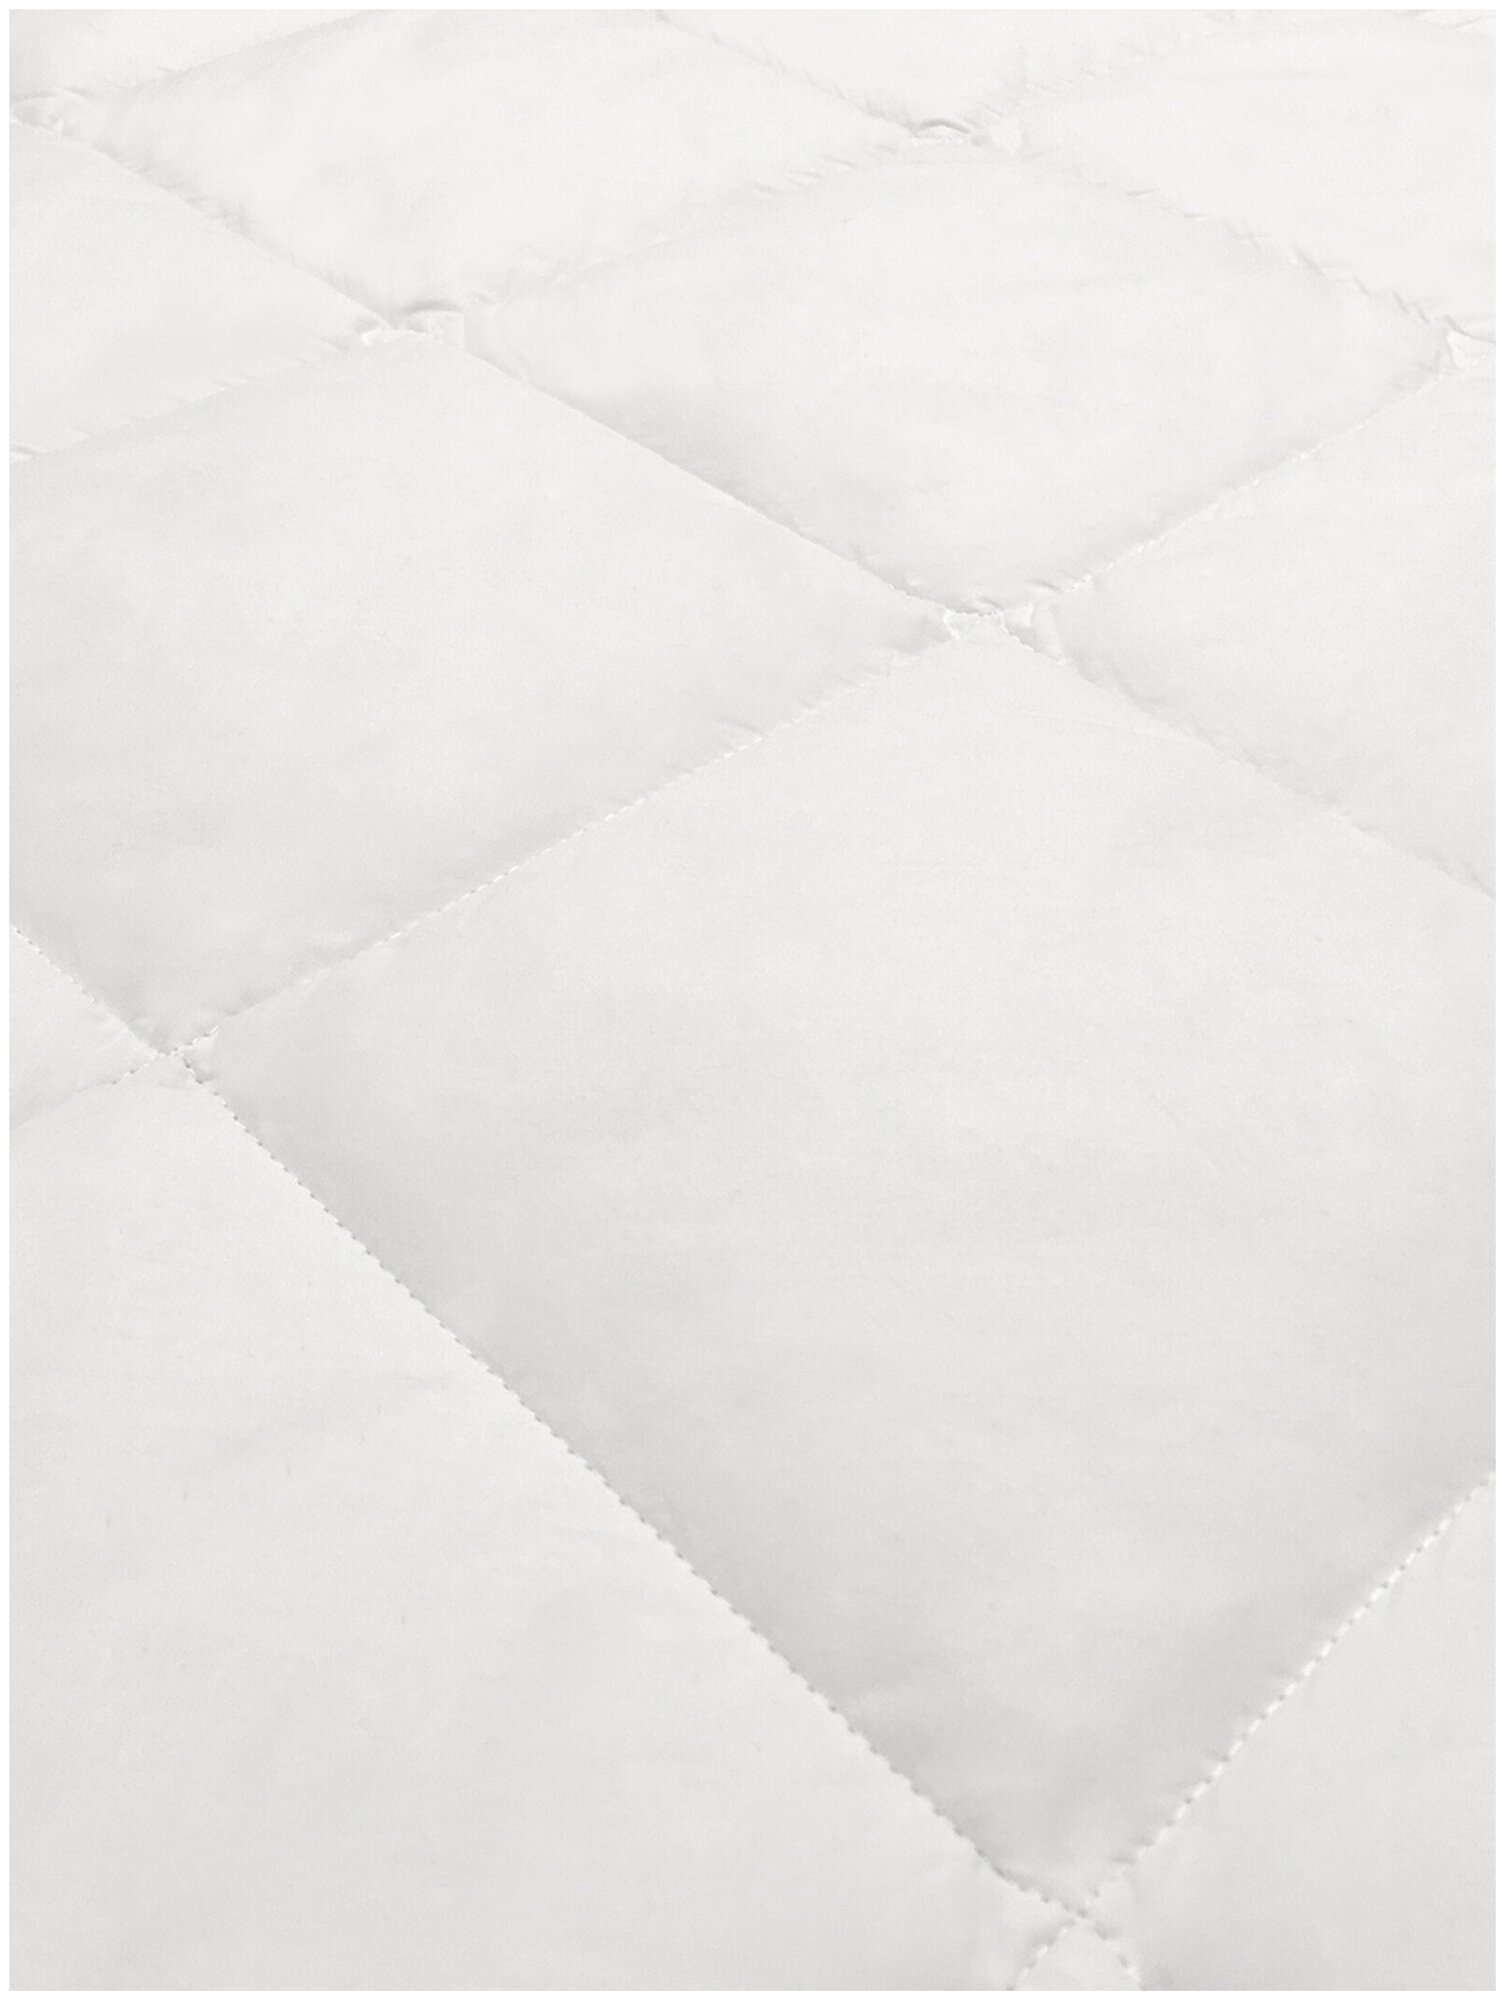 Одеяло теплое OL-Tex Бамбук 200x220, бамбуковое волокно (белое) / Зимнее одеяло Ол-Текс Бамбук 200 x 220 см. - фотография № 2